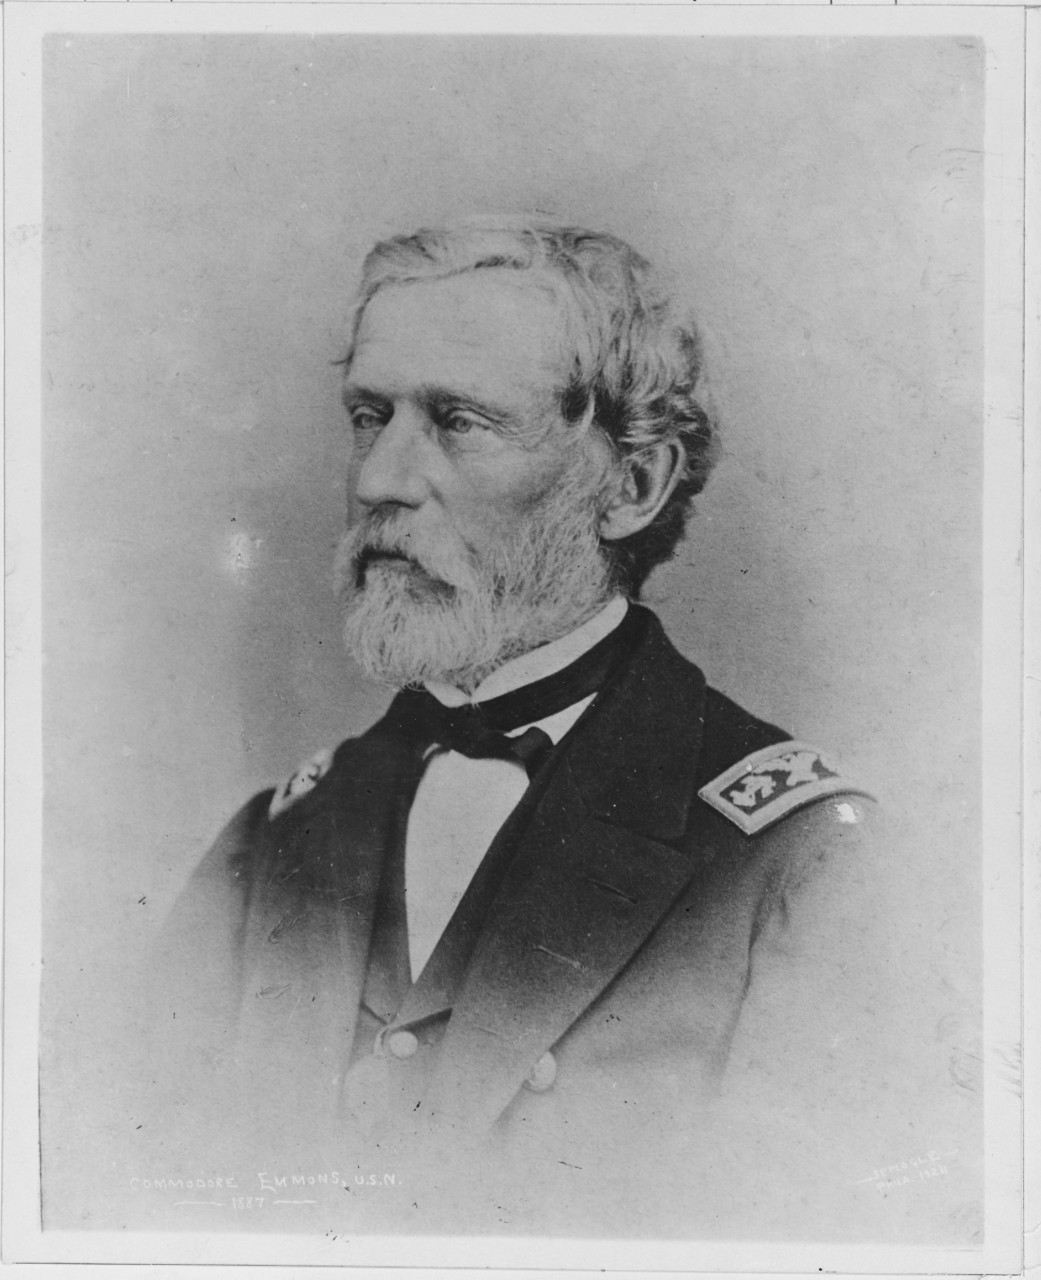 Commodore George F. Emmons, USN